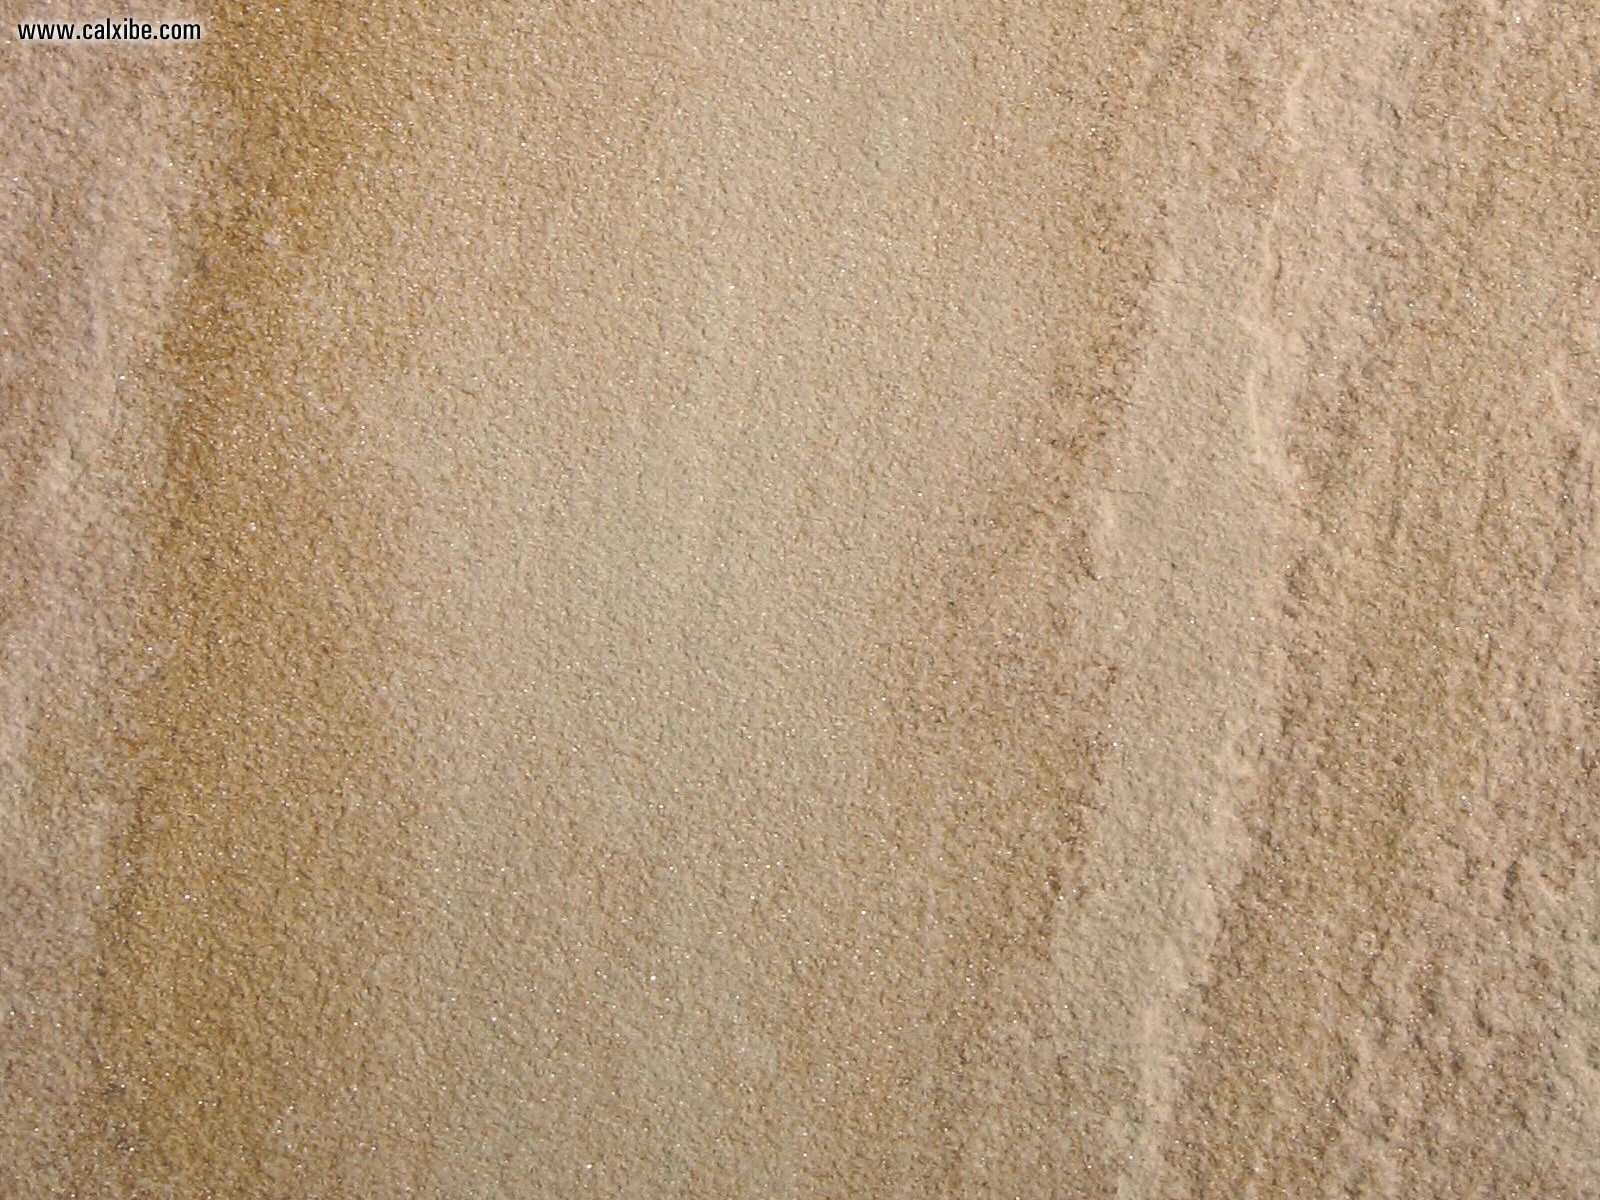 sandstone from afton minnesota specimen urban wallcovering sandstone